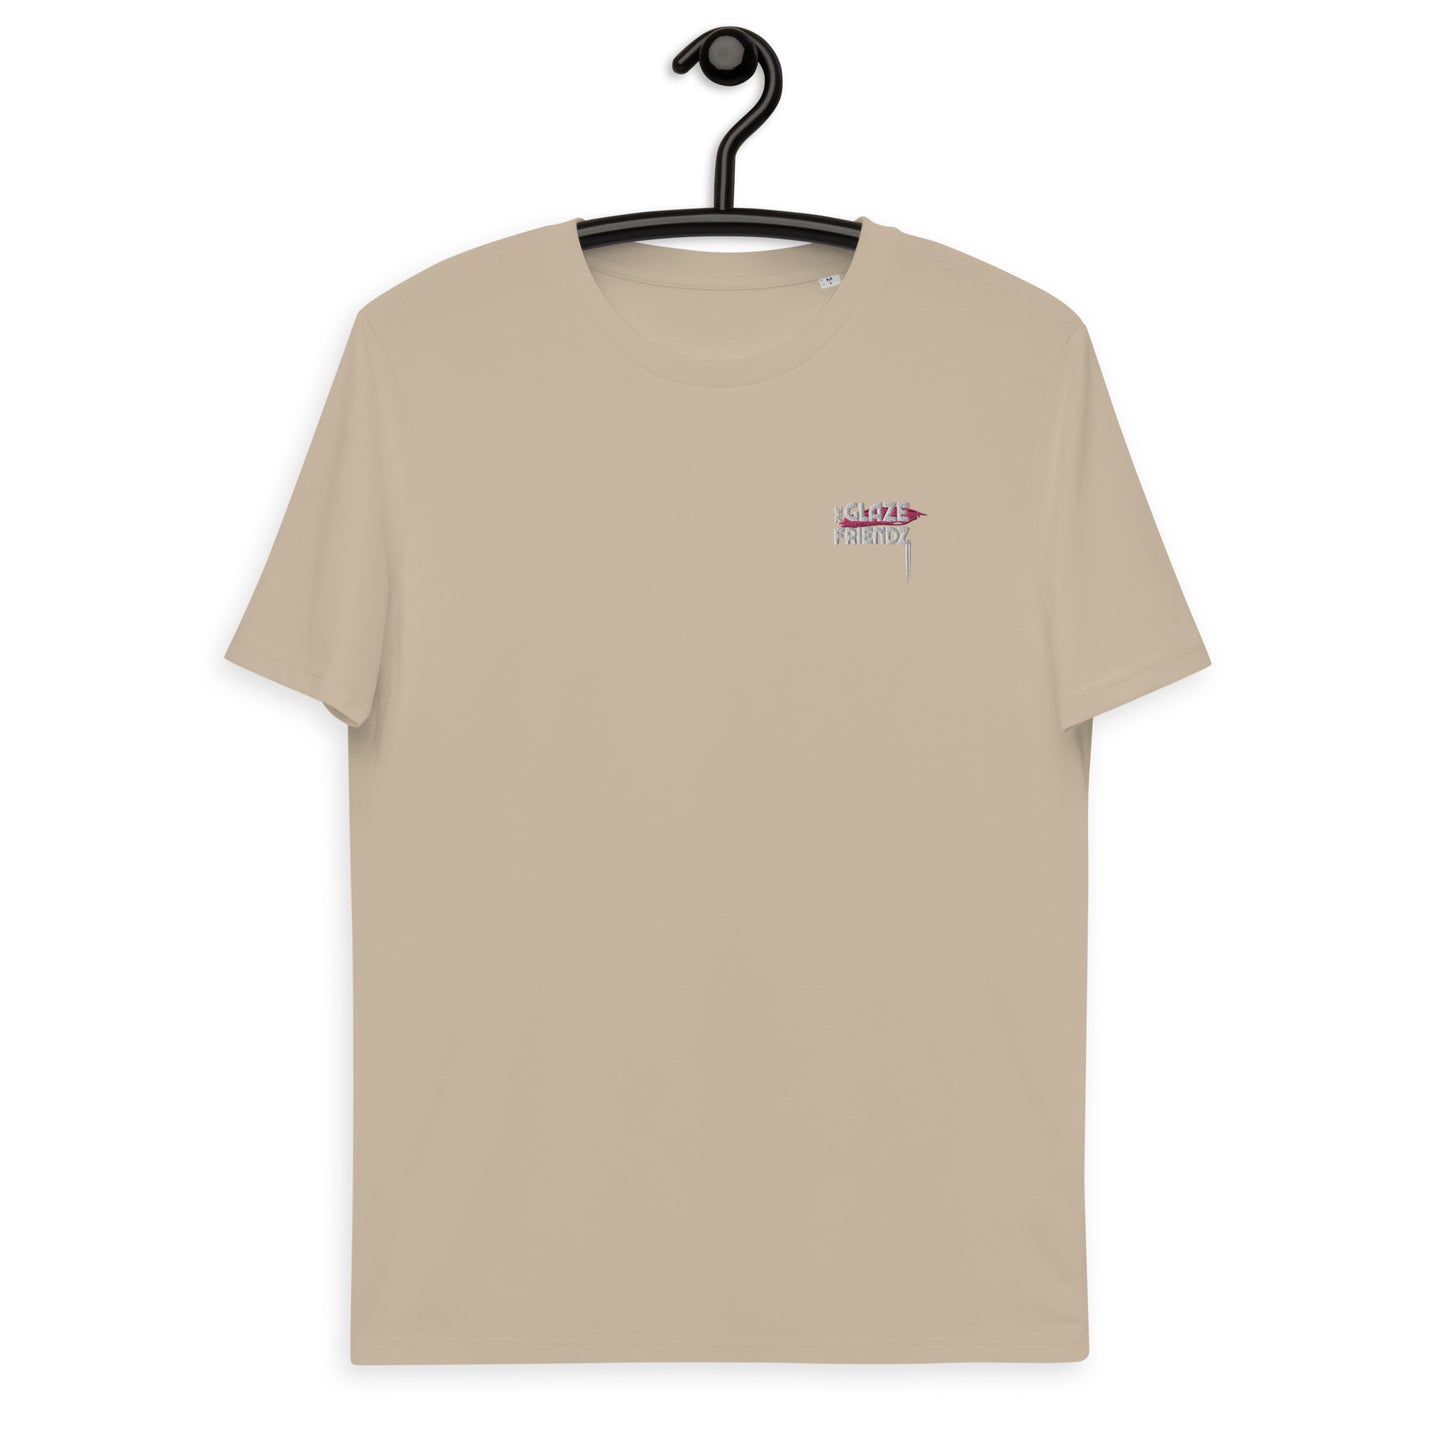 Basic Premium Glaze T-Shirt Colors